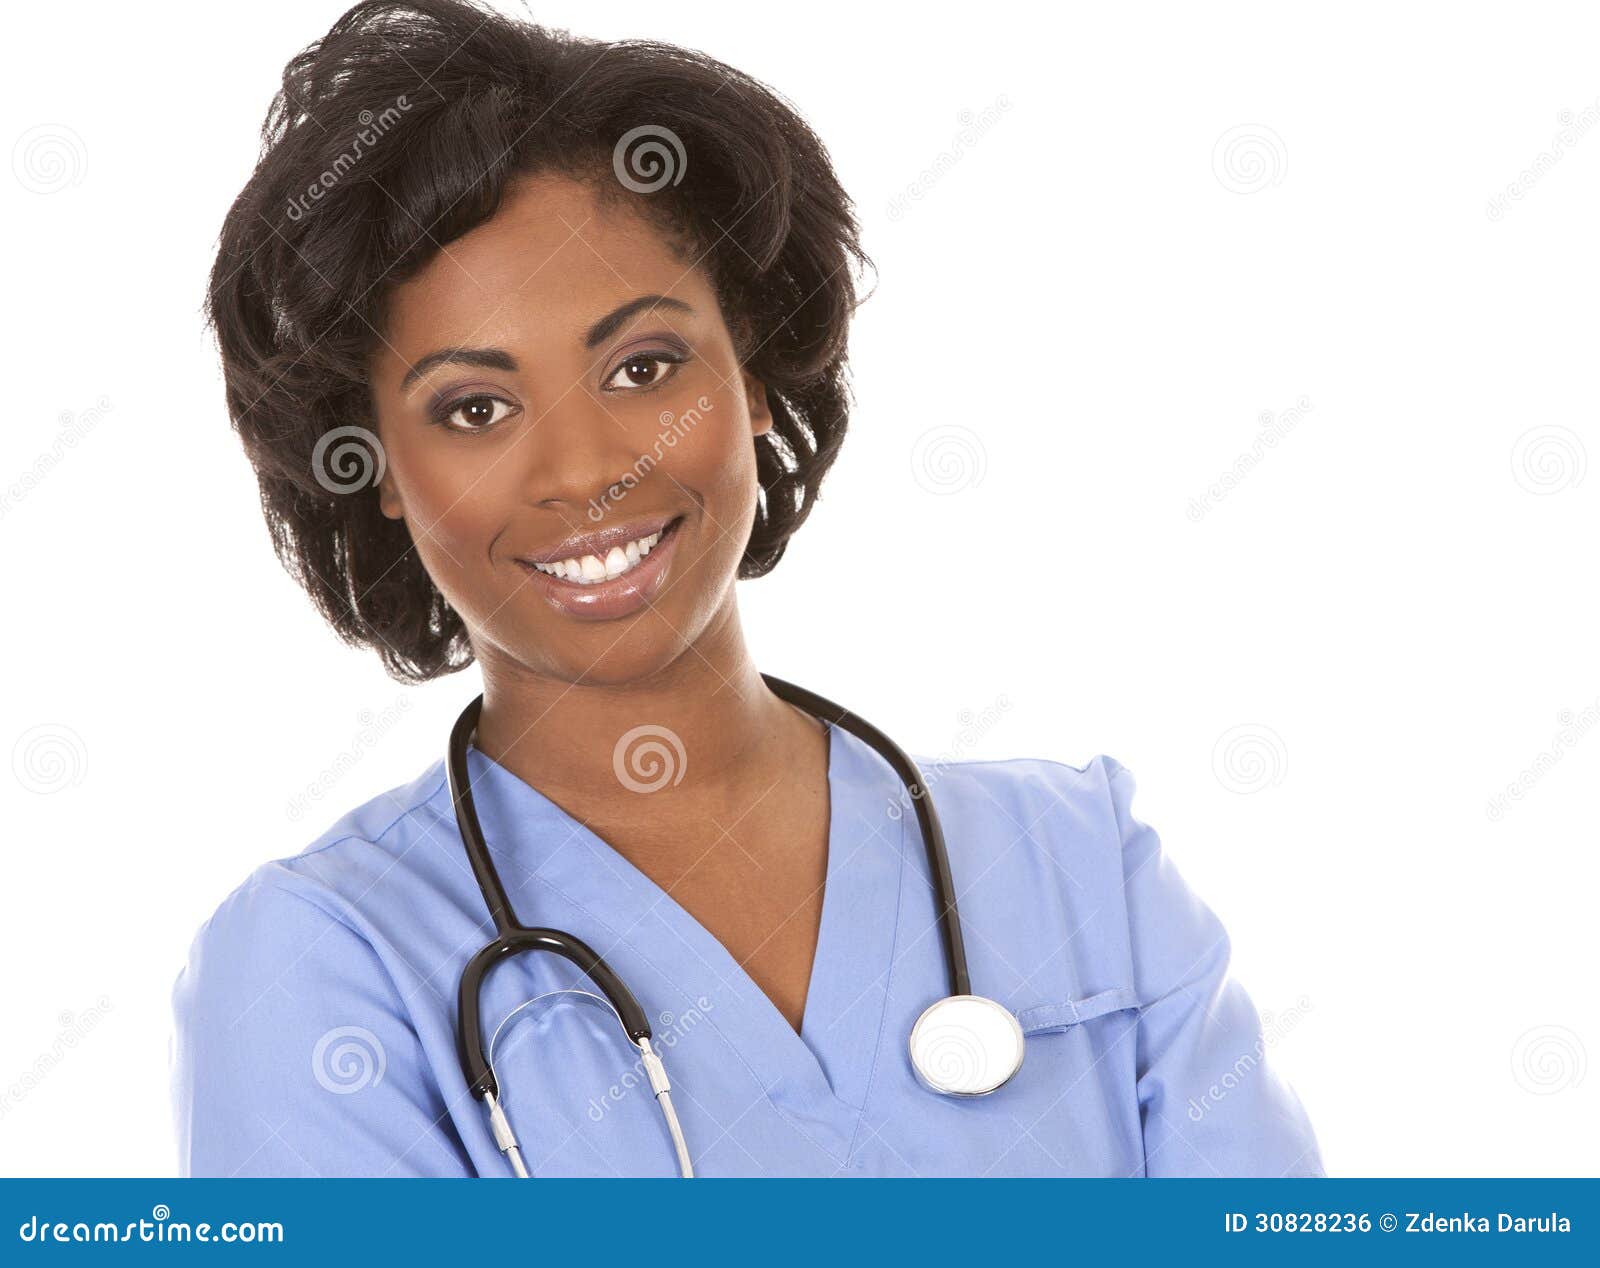 Black medical nurse stock photo. Image of health, happy - 30828236